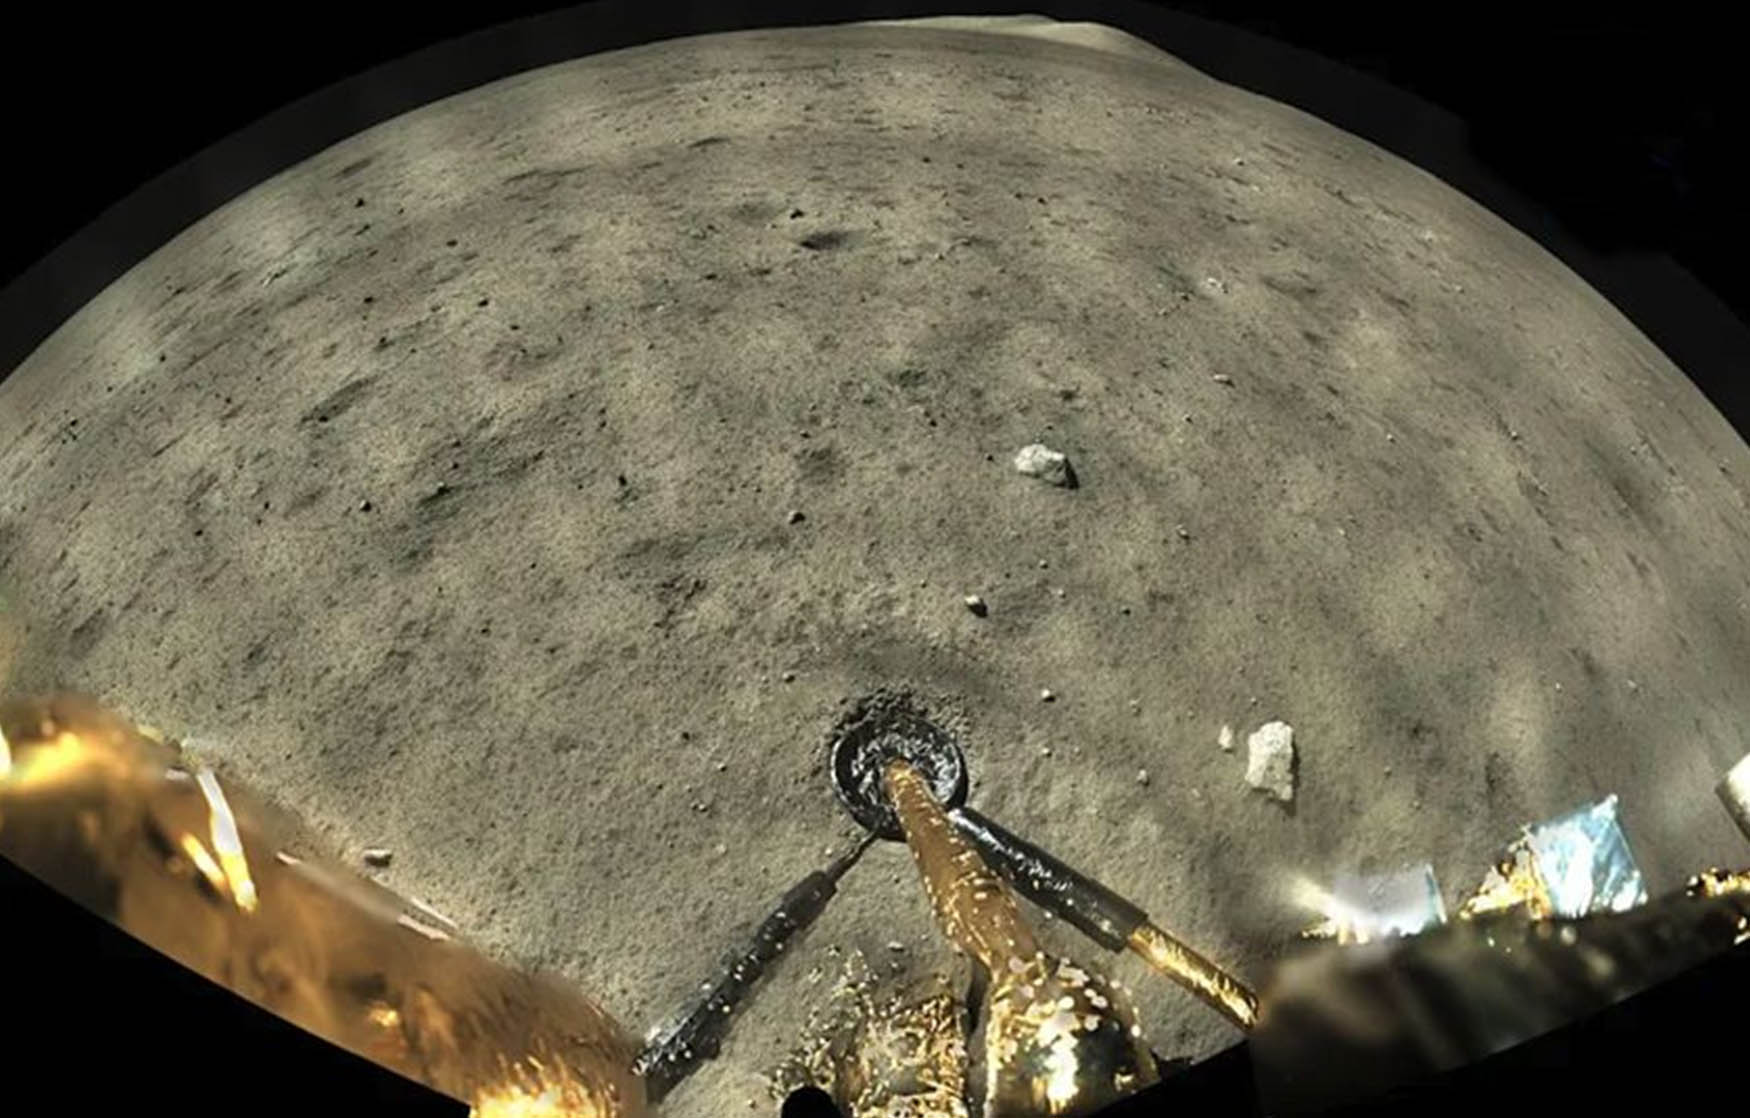 lunar surface